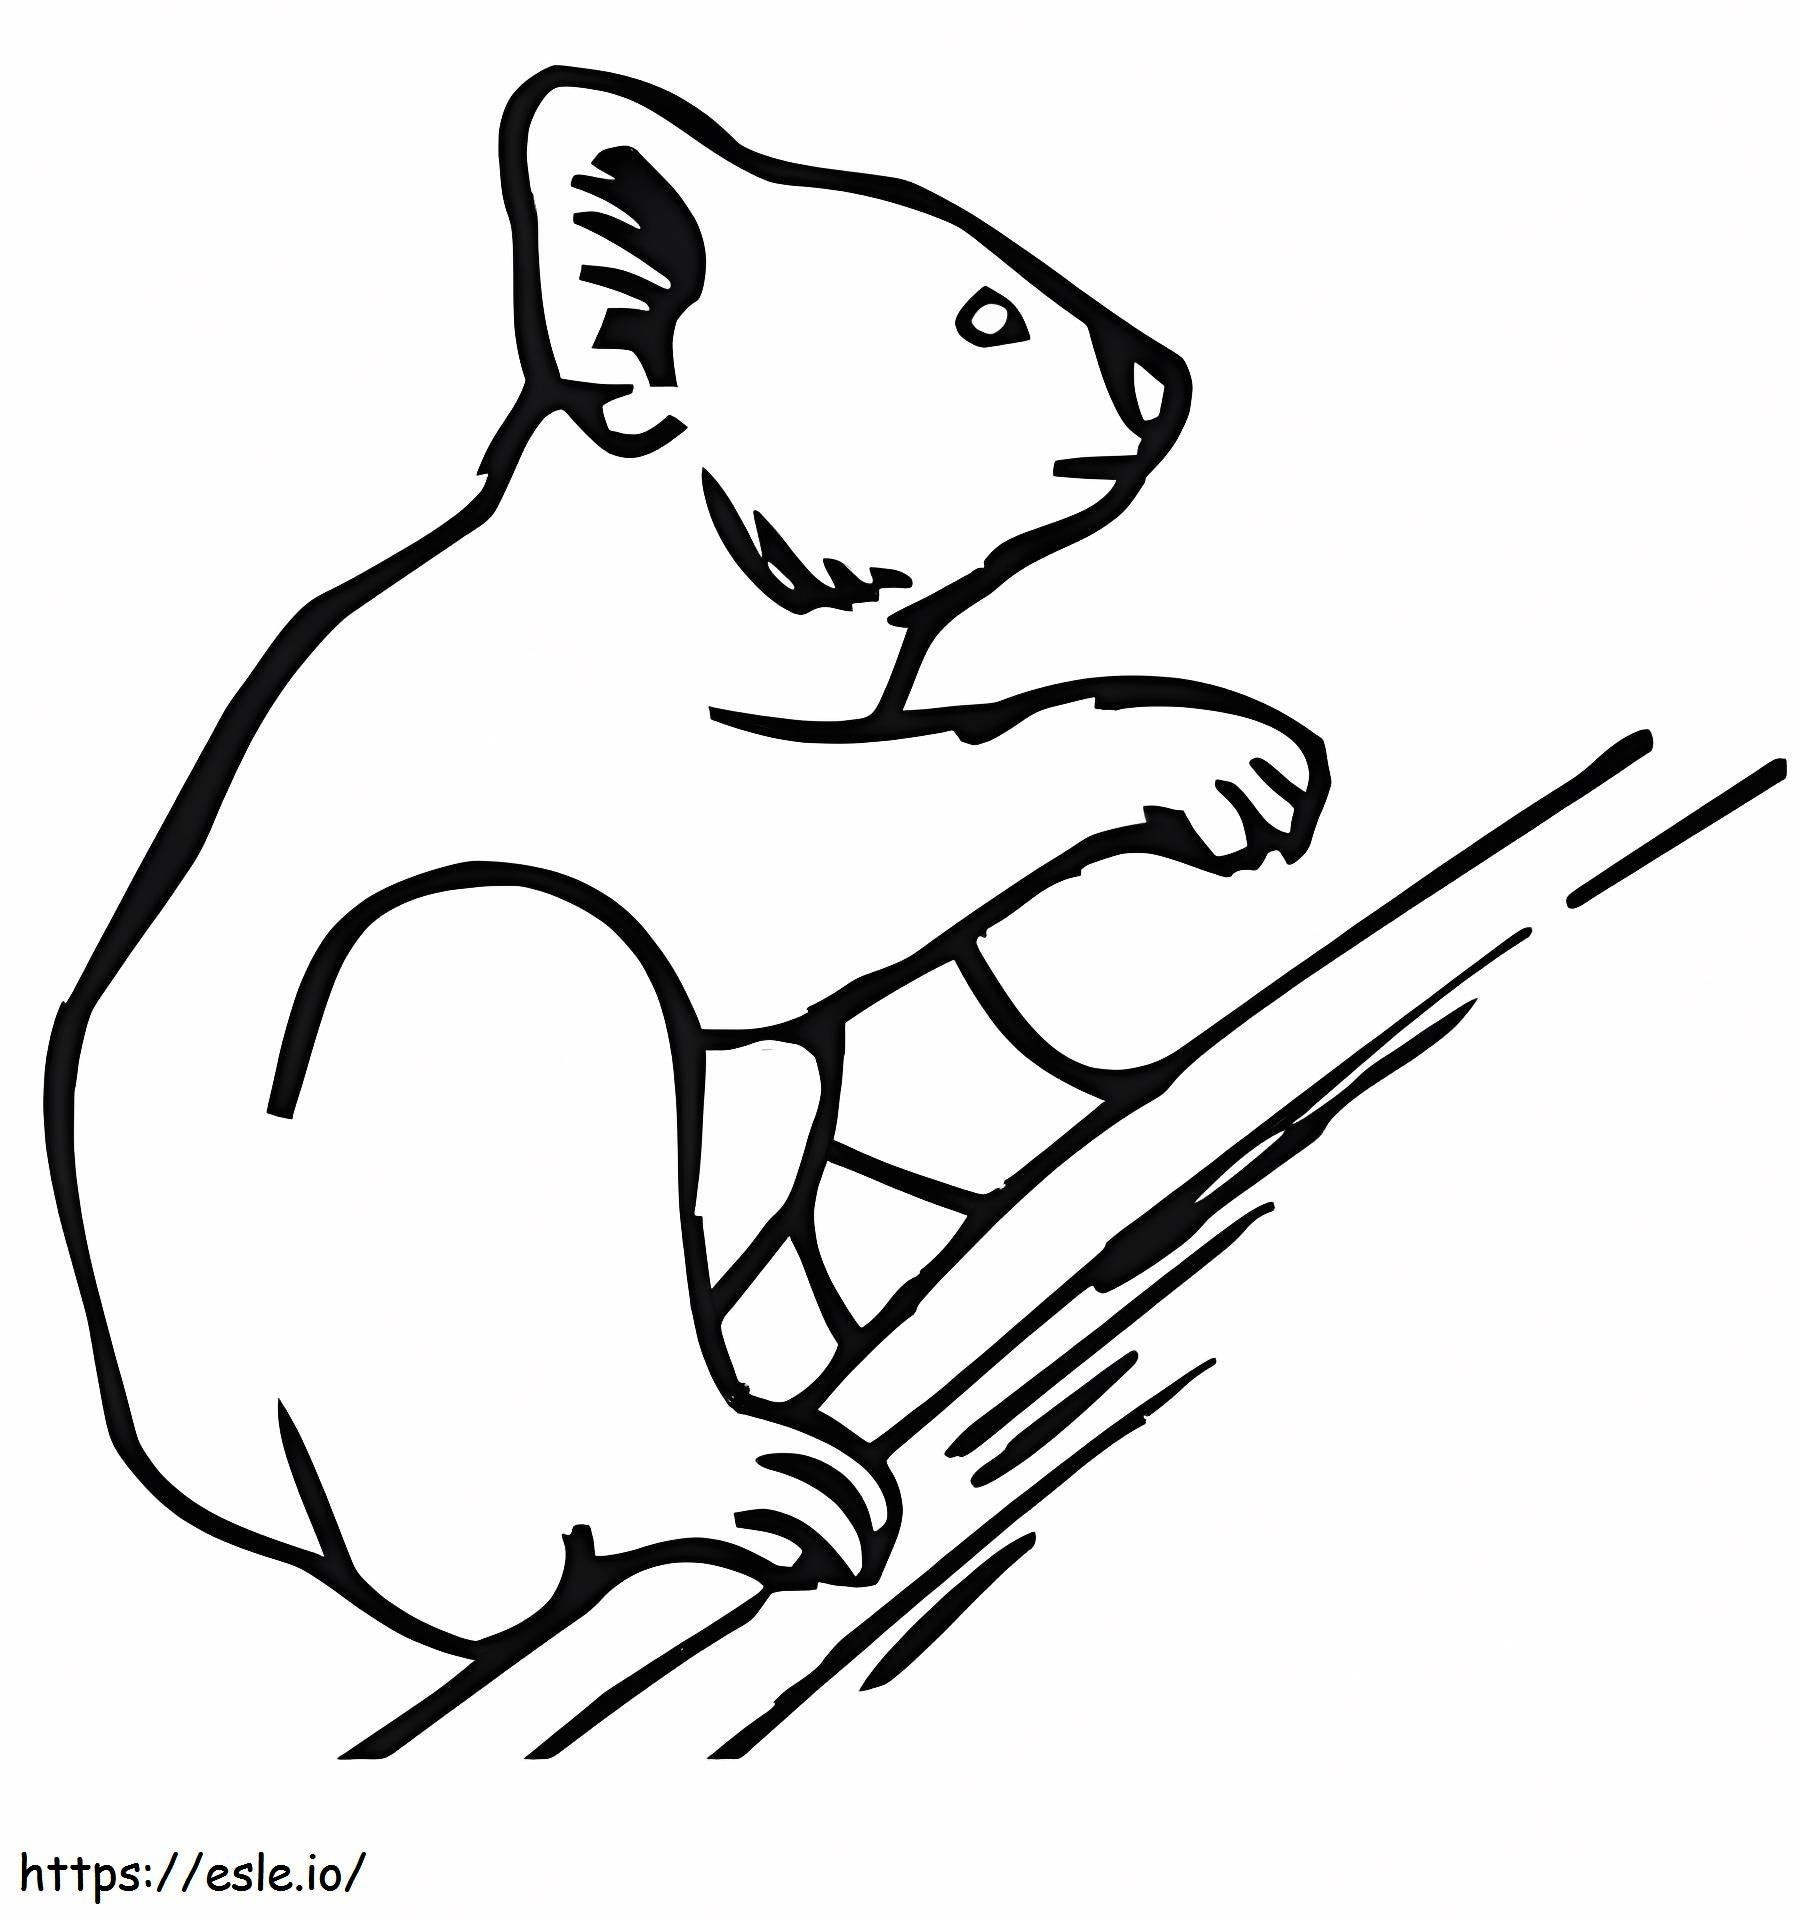 Desenho de escalada de coala para colorir